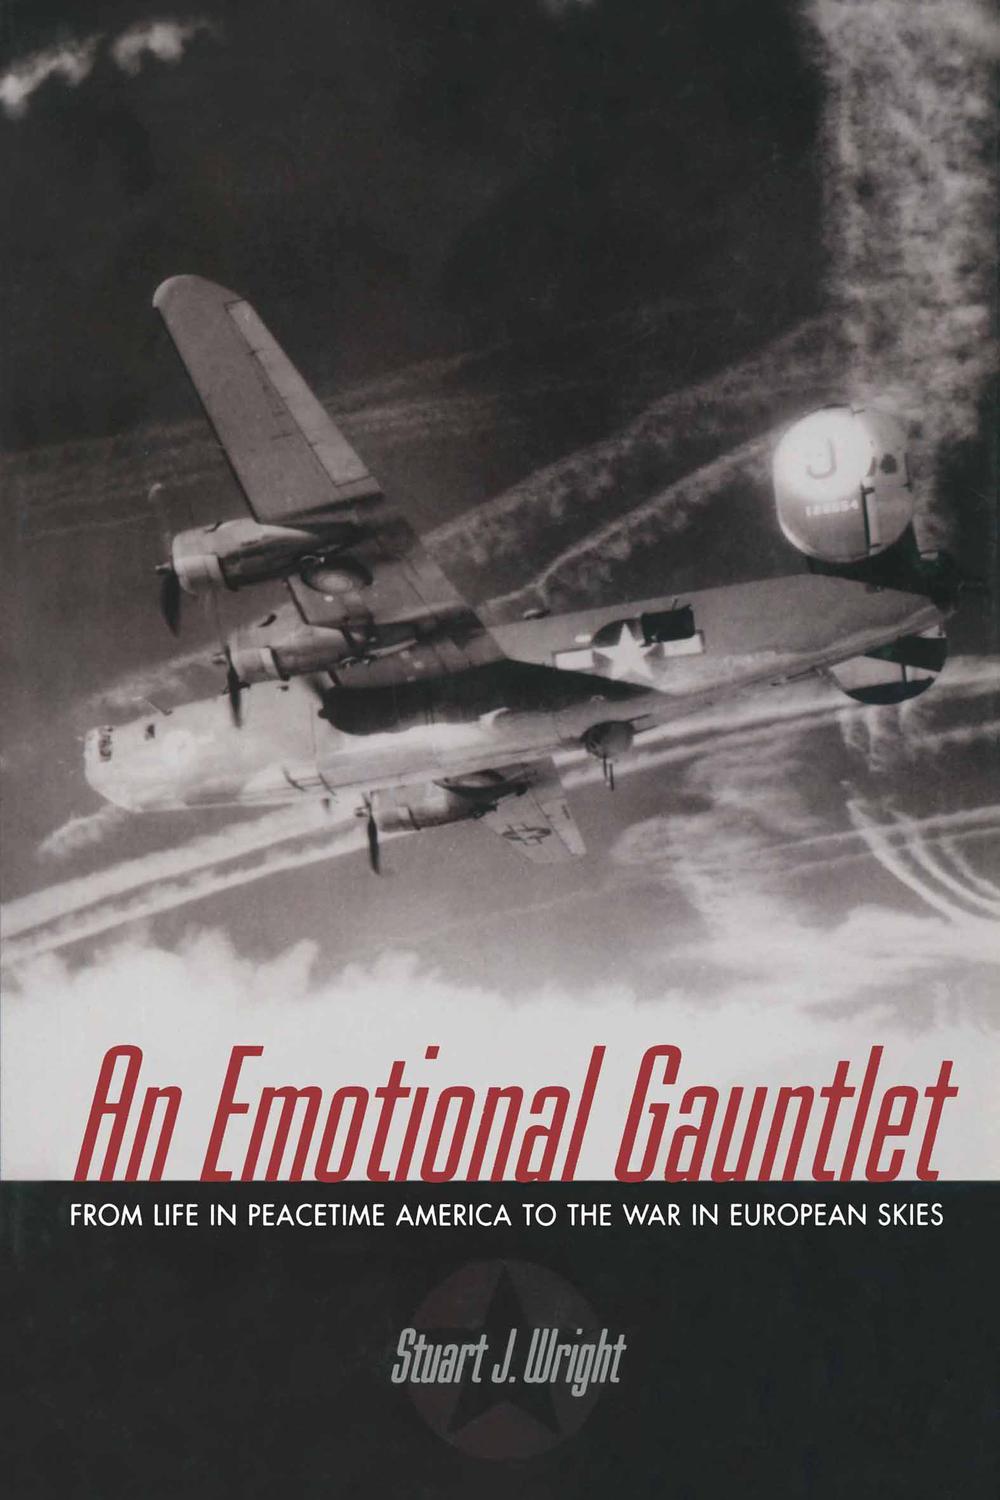 An Emotional Gauntlet - Stuart J. Wright